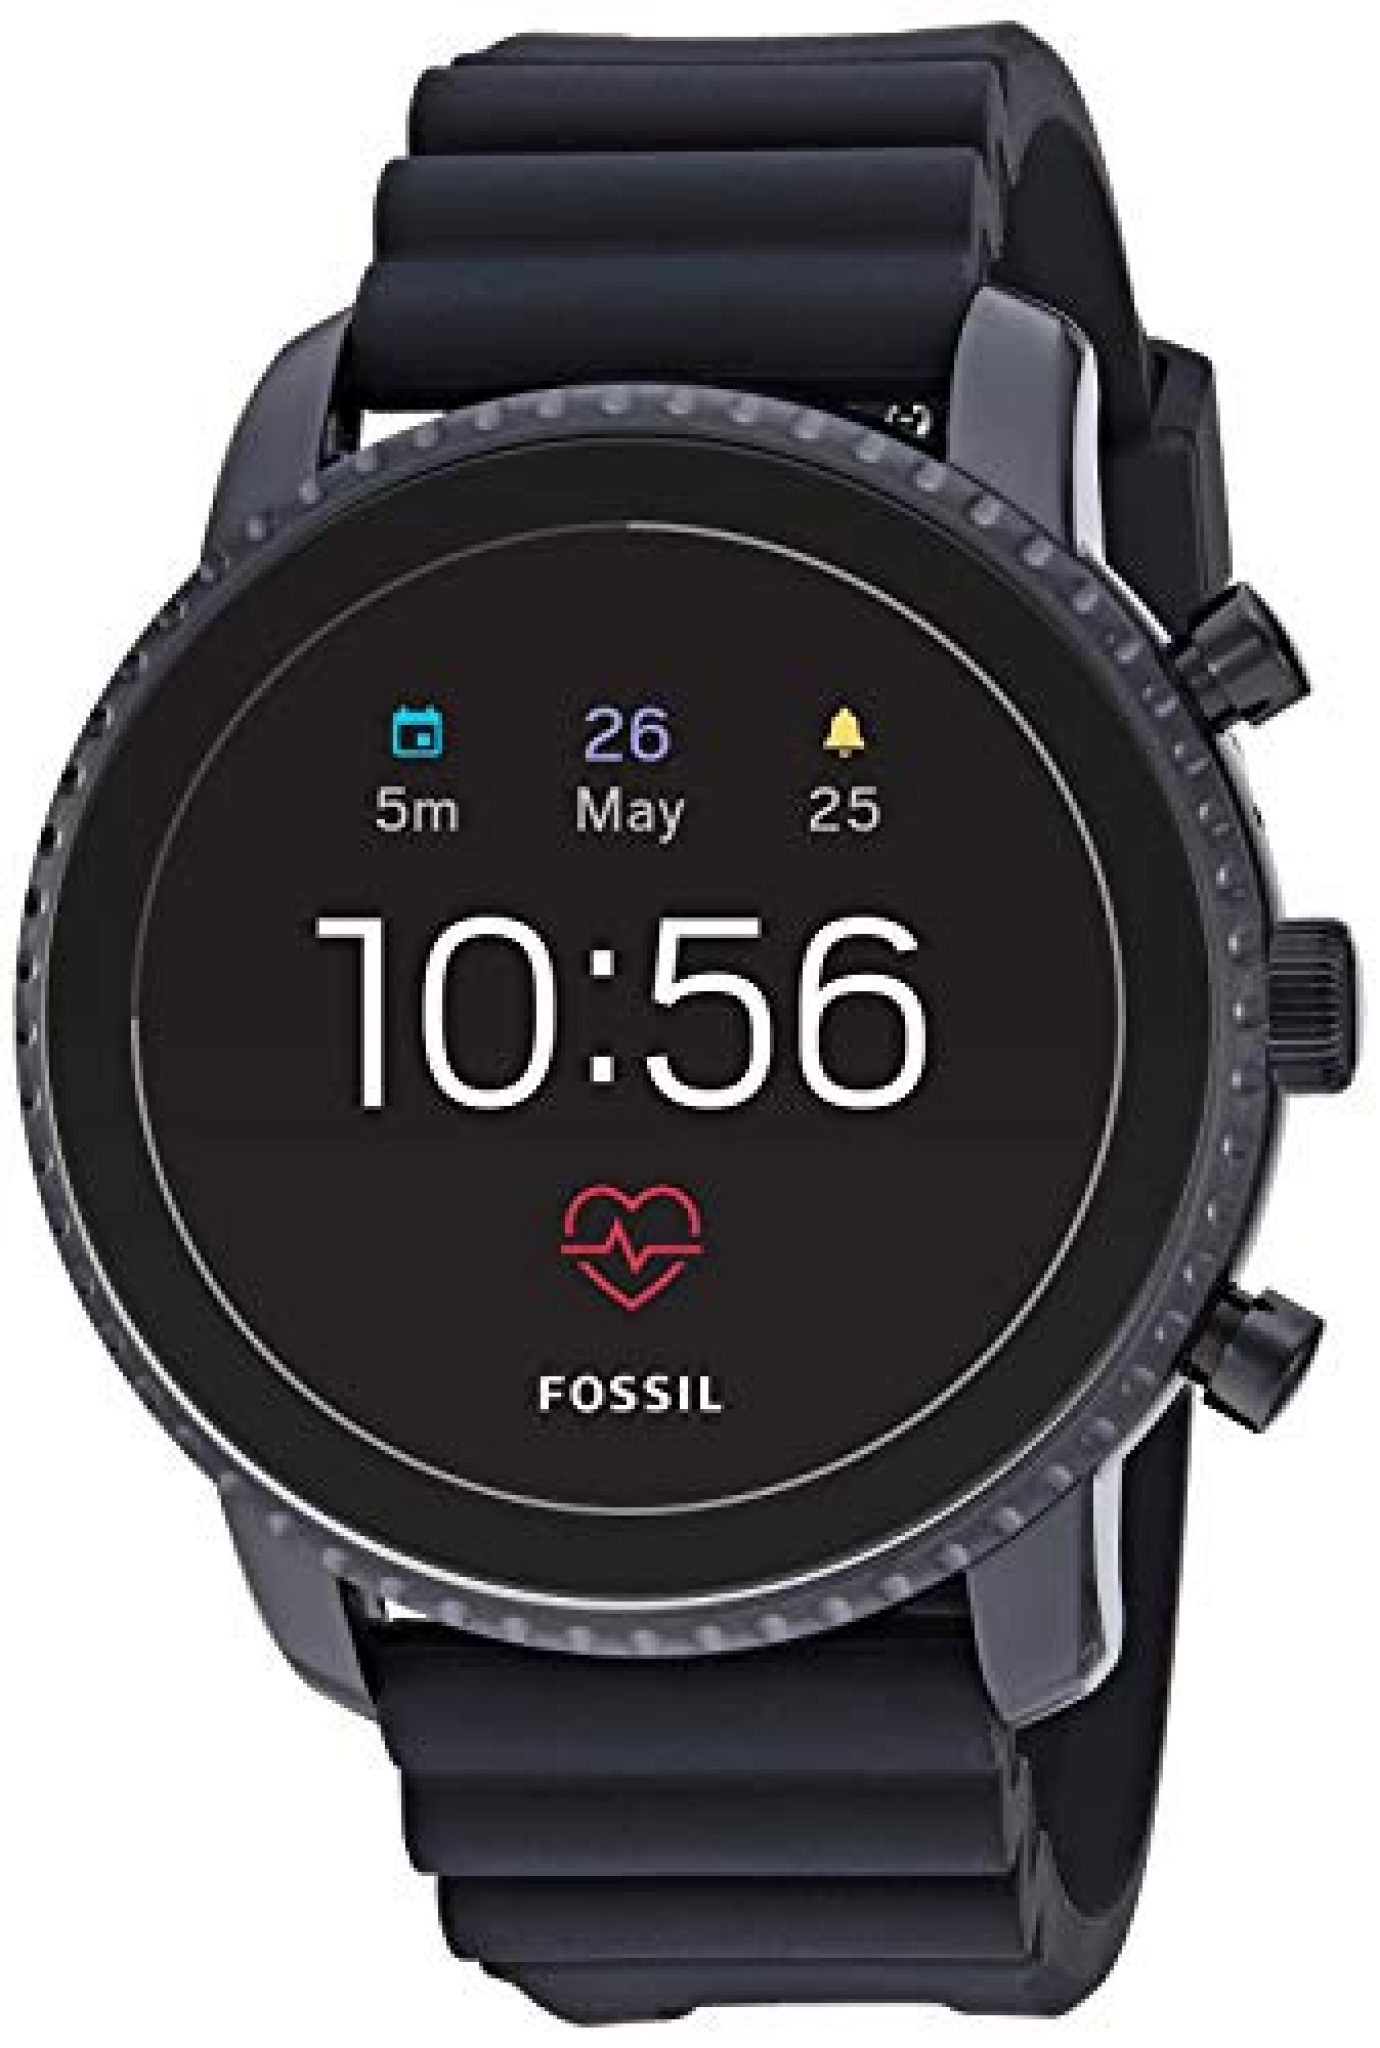 Fossil Men's Gen 4 Explorist HR Stainless Steel Touchscreen Smartwatch ...